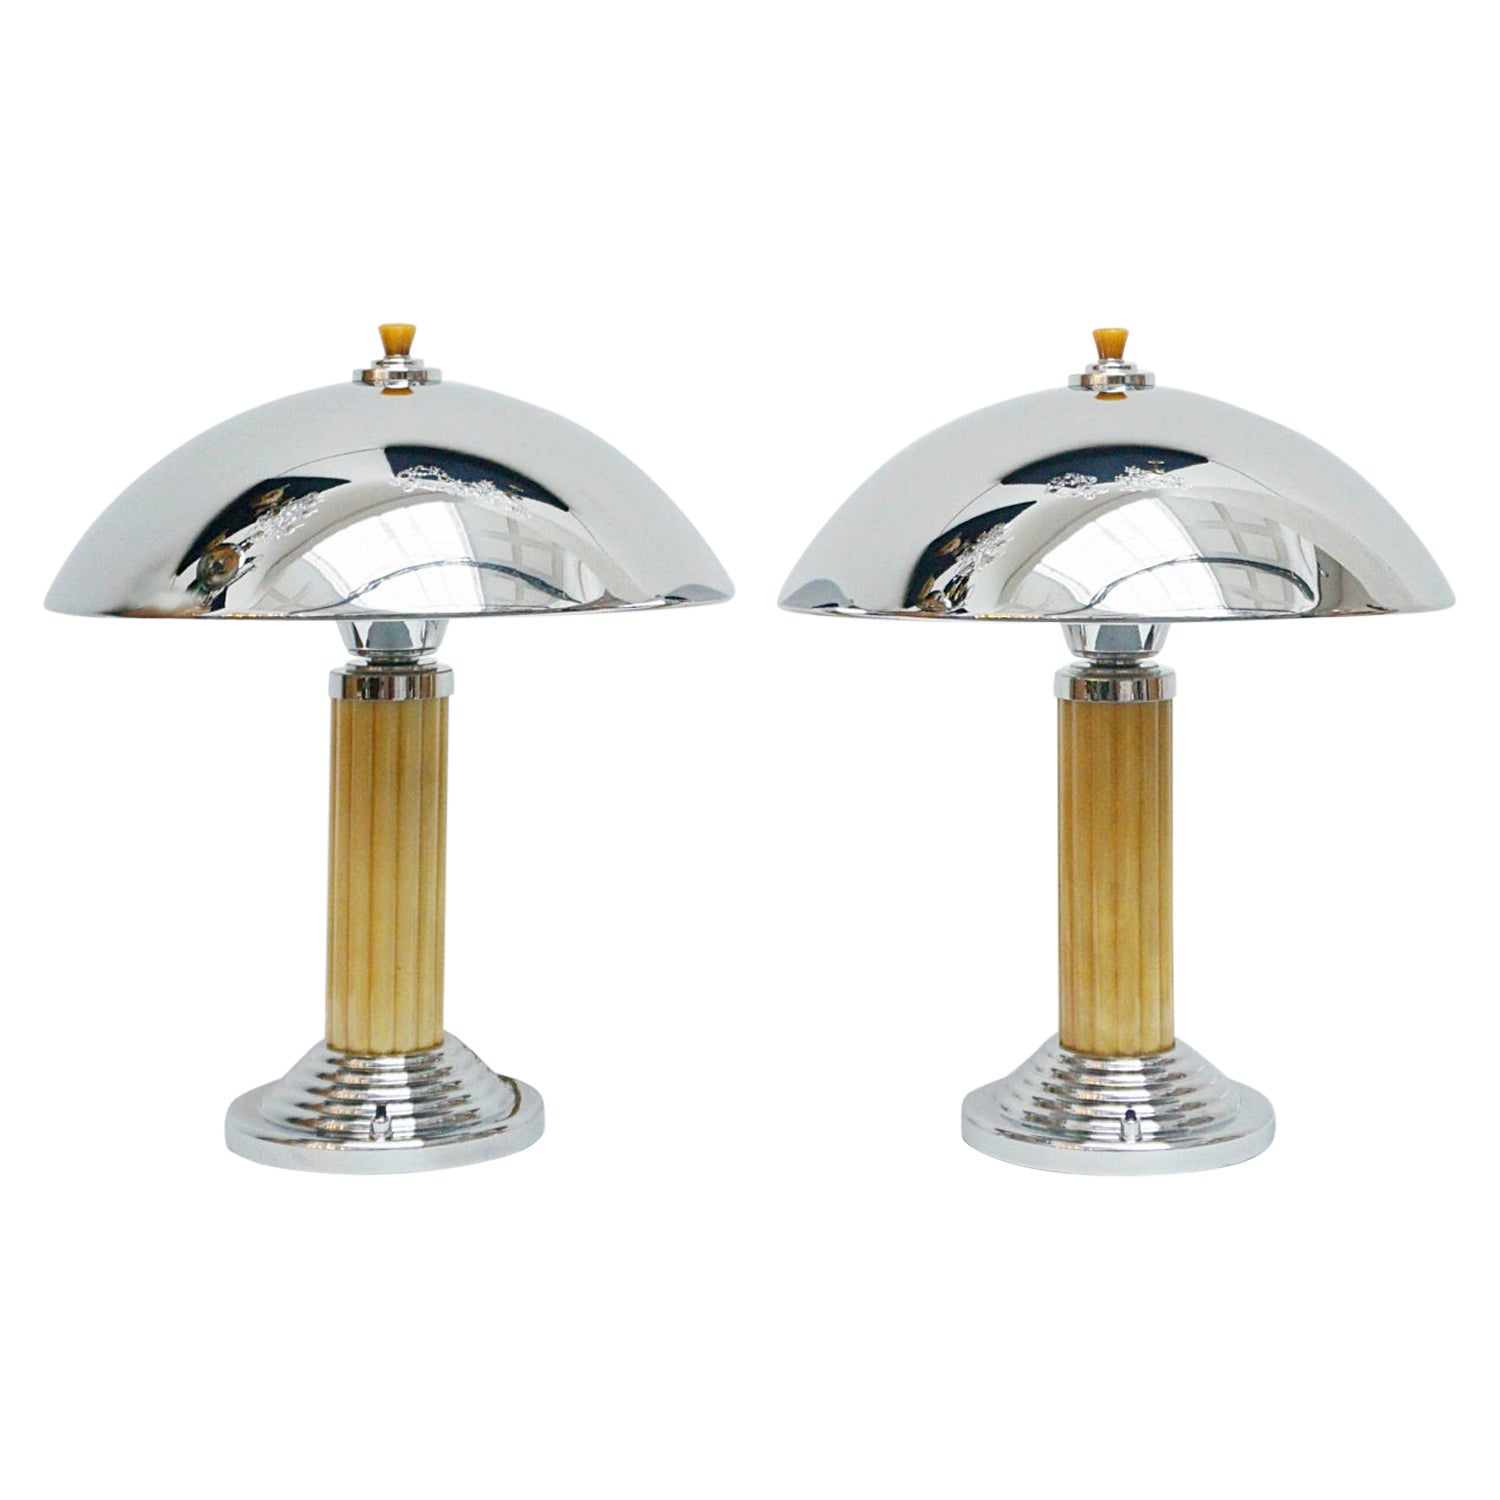 Art Deco Dome Lamps Bakelite and Chromed Metal Vintage Lighting For Sale